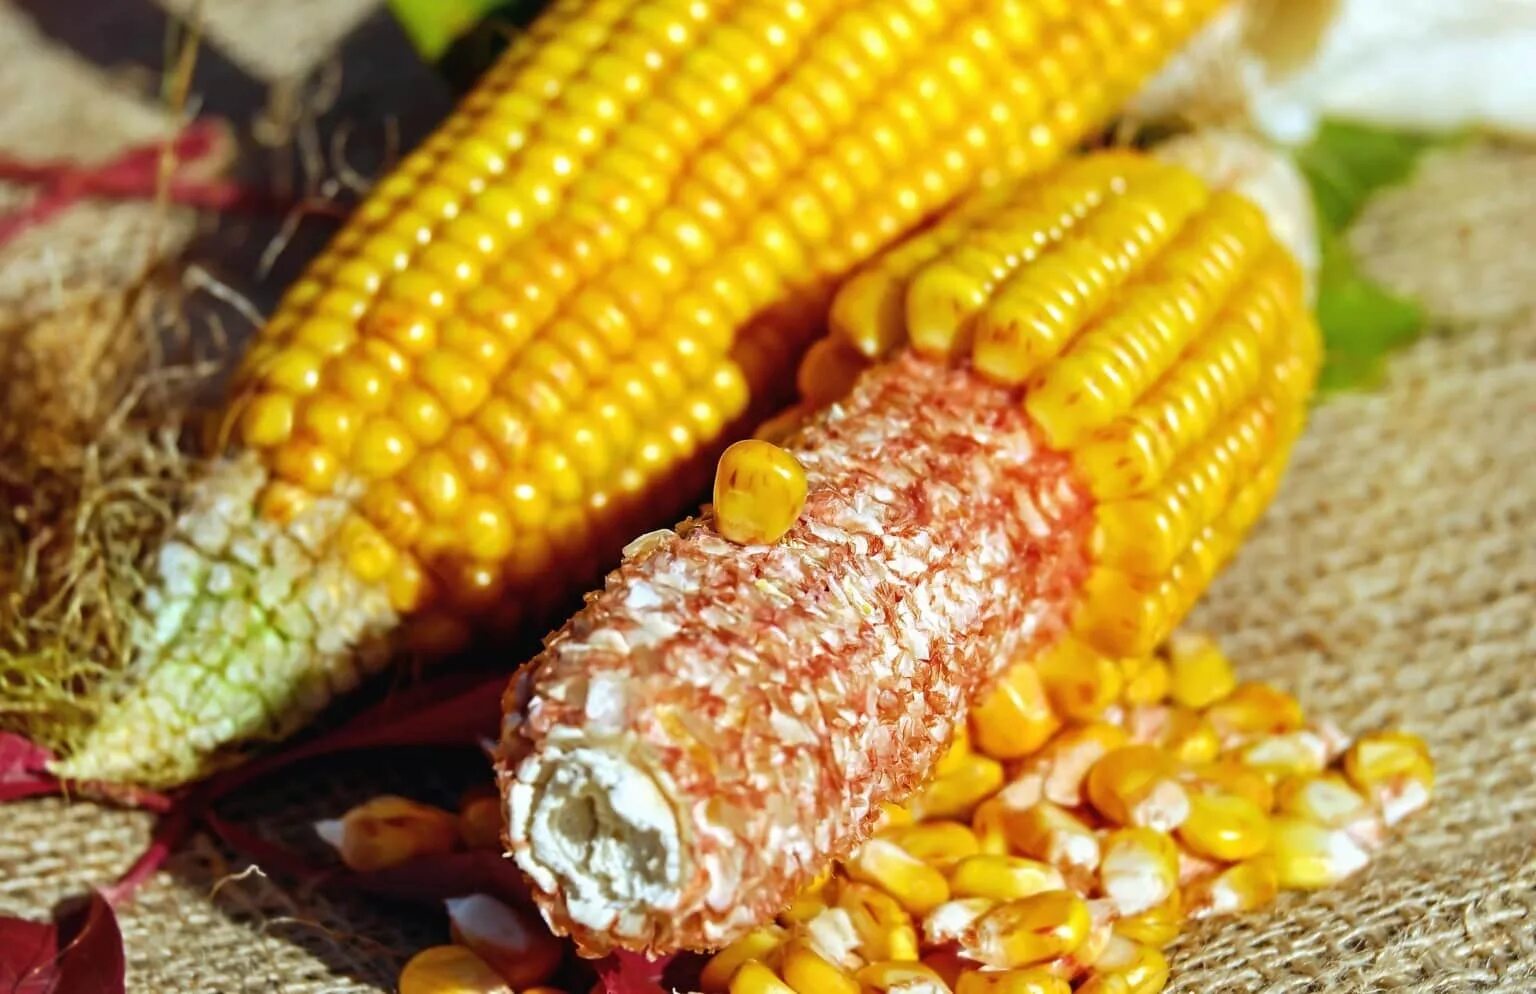 Фото кукурузы. Кукуруза початок. Кукурузная кочерыжка. Кукурузные початки 220г в/у (Sweet Corn). Зерна в початке кукурузы.